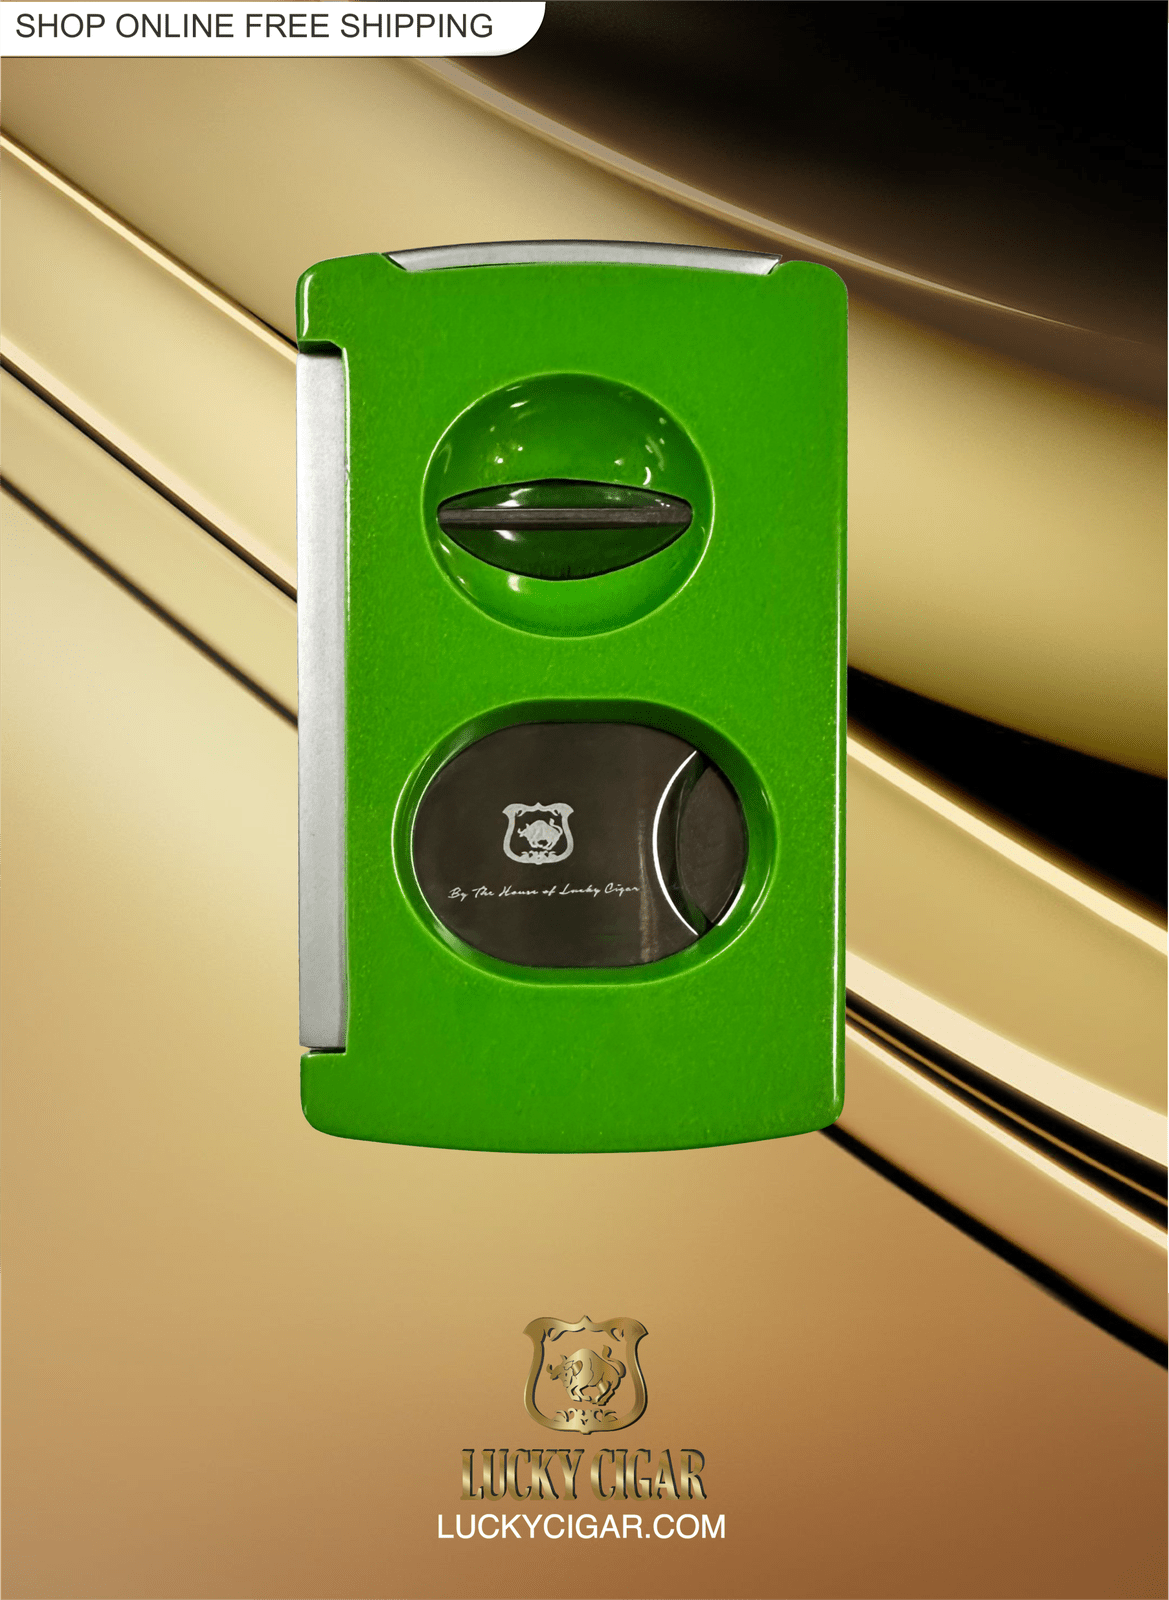 Cigar Lifestyle Accessories: Cigar V, Standard, Punch Cutter in Green